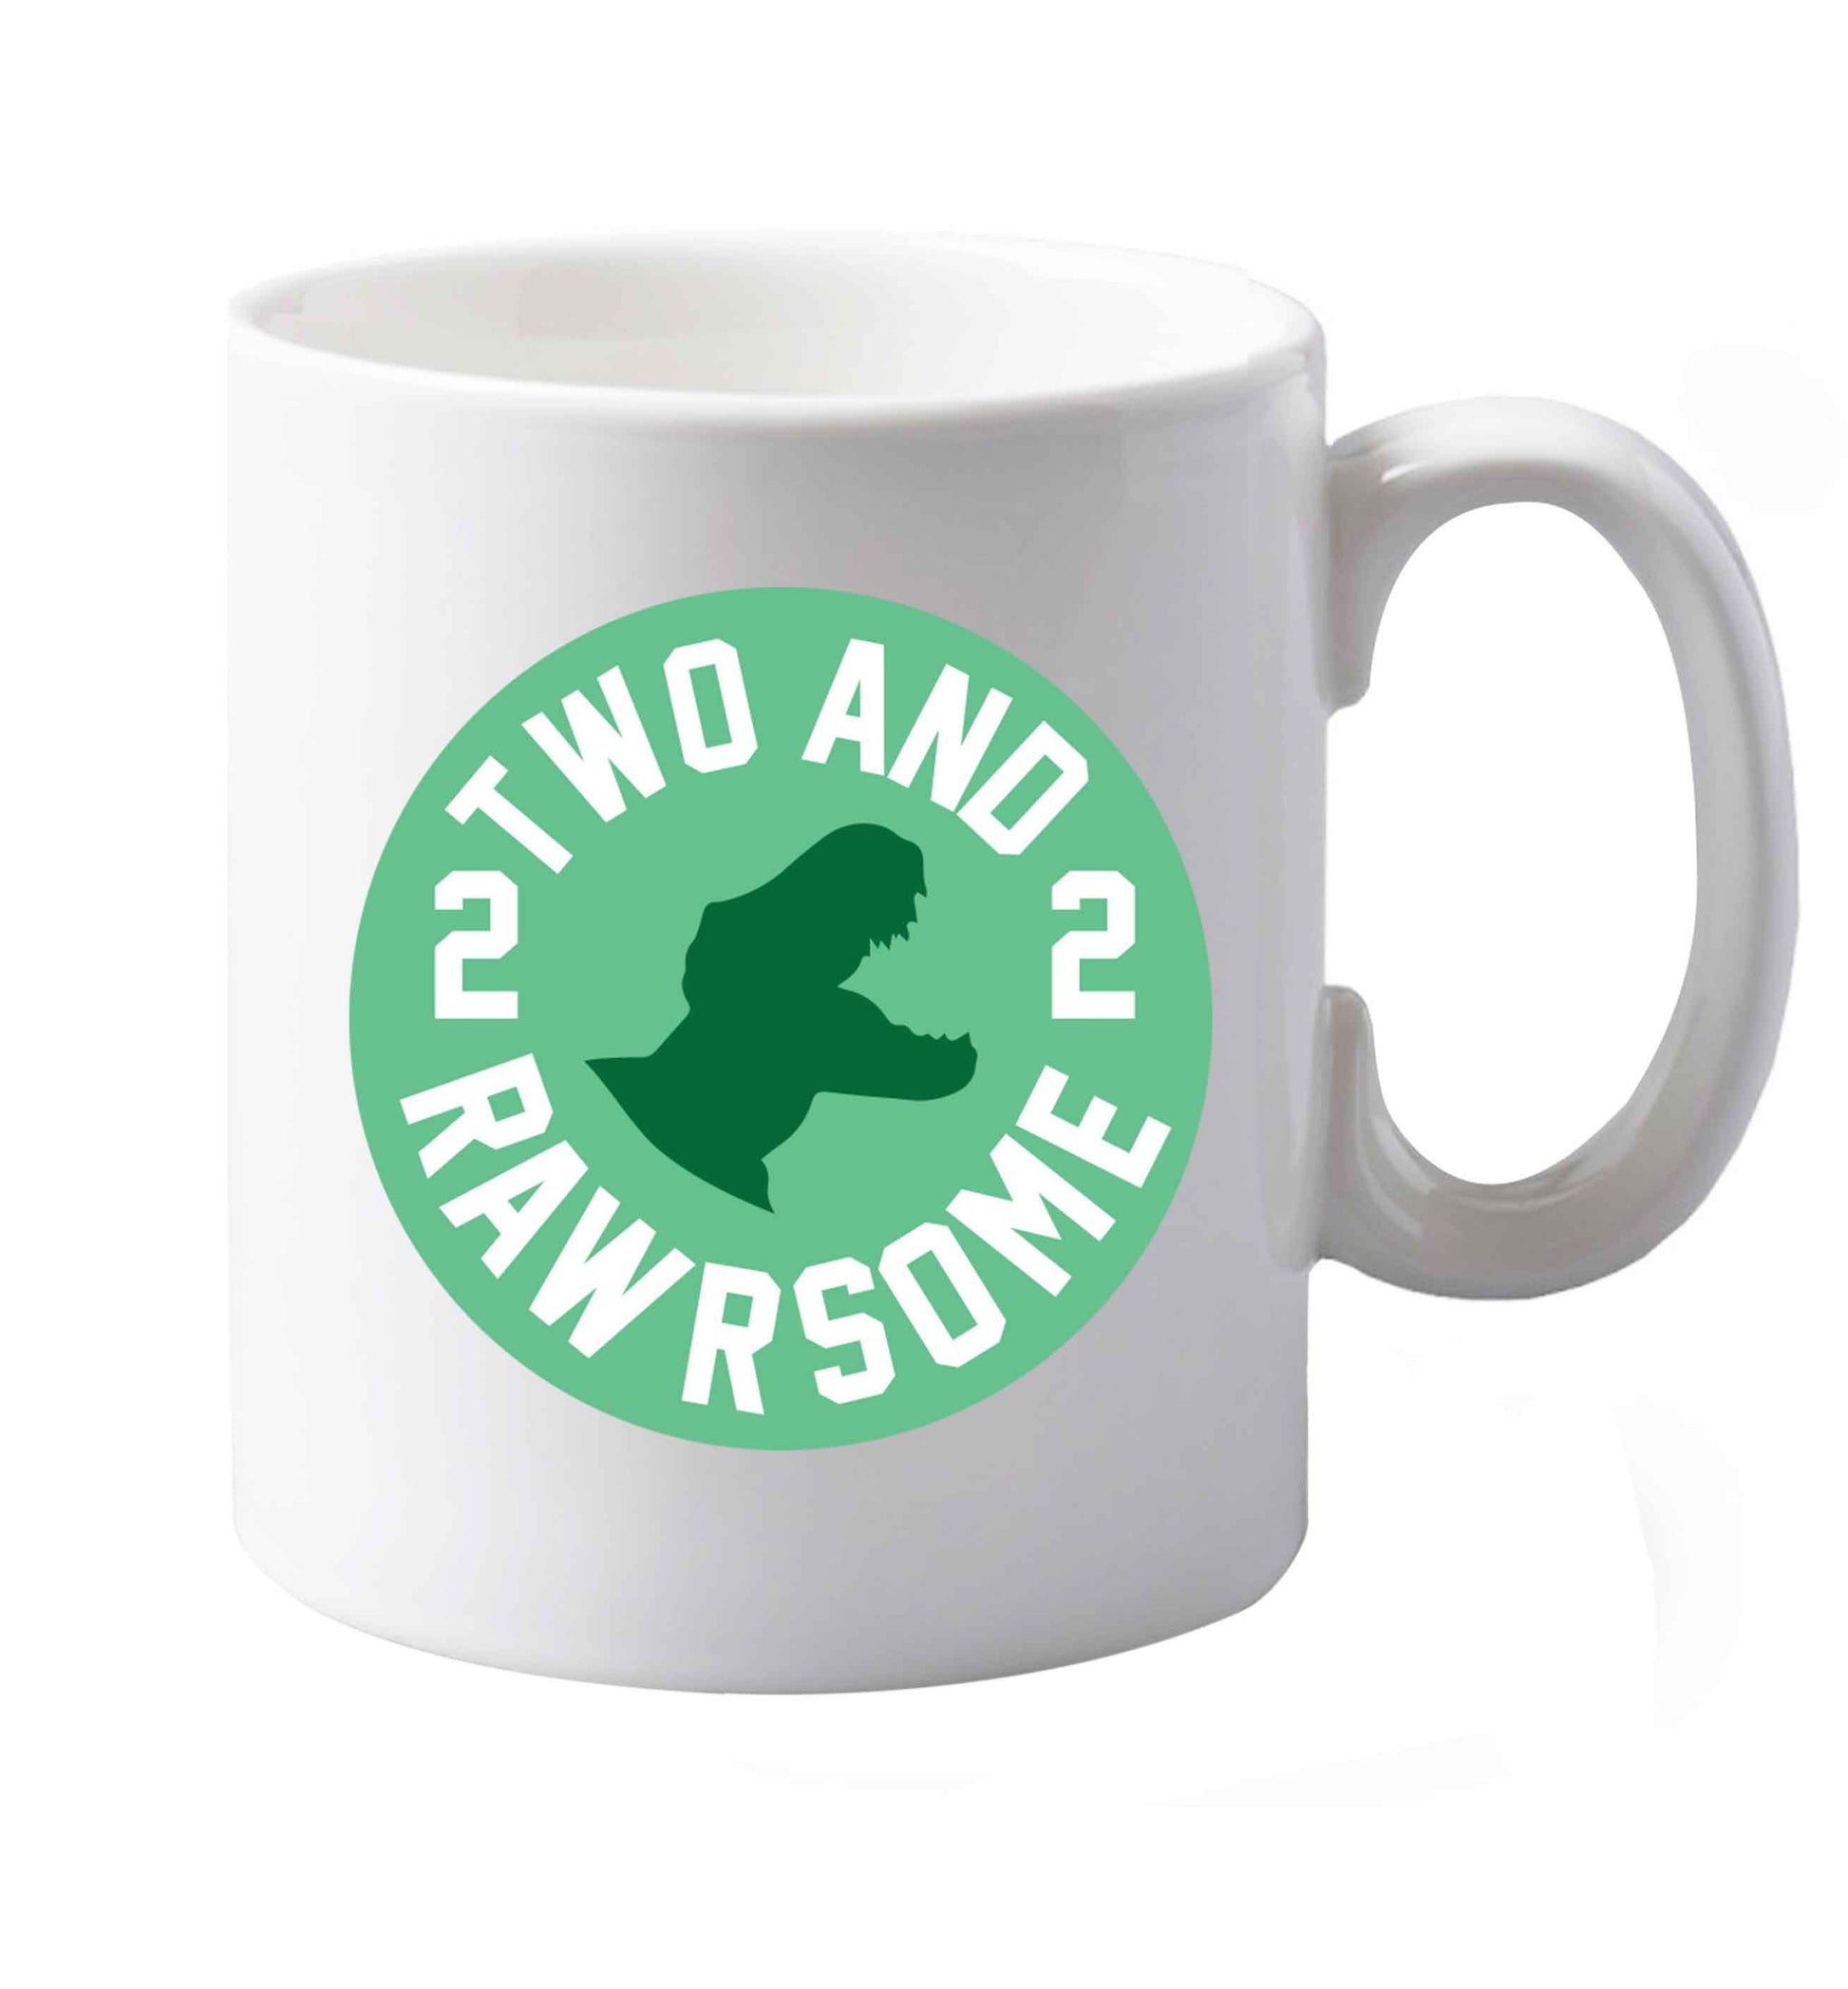 10 oz Two and rawrsome ceramic mug both sides